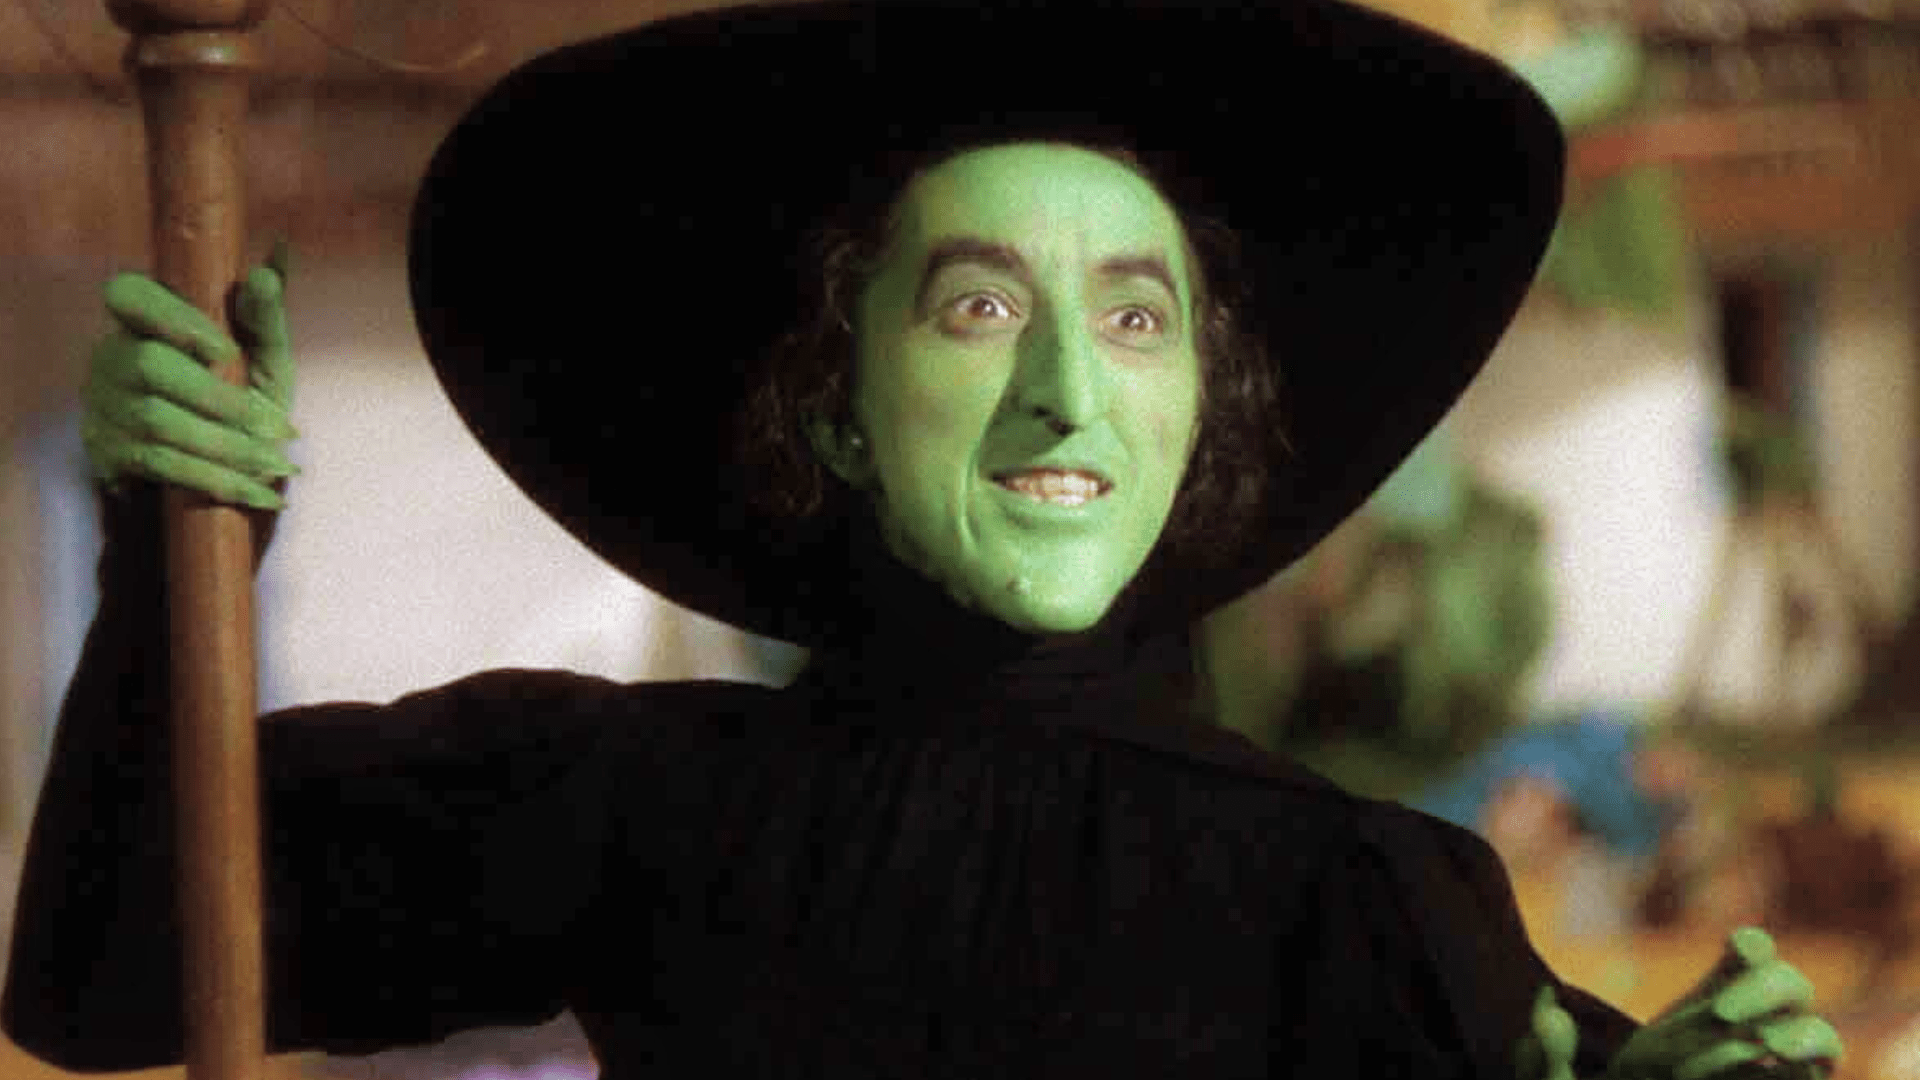 Margaret Hamilton The Wizard Of Oz - Inhaling Asbestos, Facial Burns and Toxic Make Up: Margaret Hamilton’s Time In The Wizard Of Oz